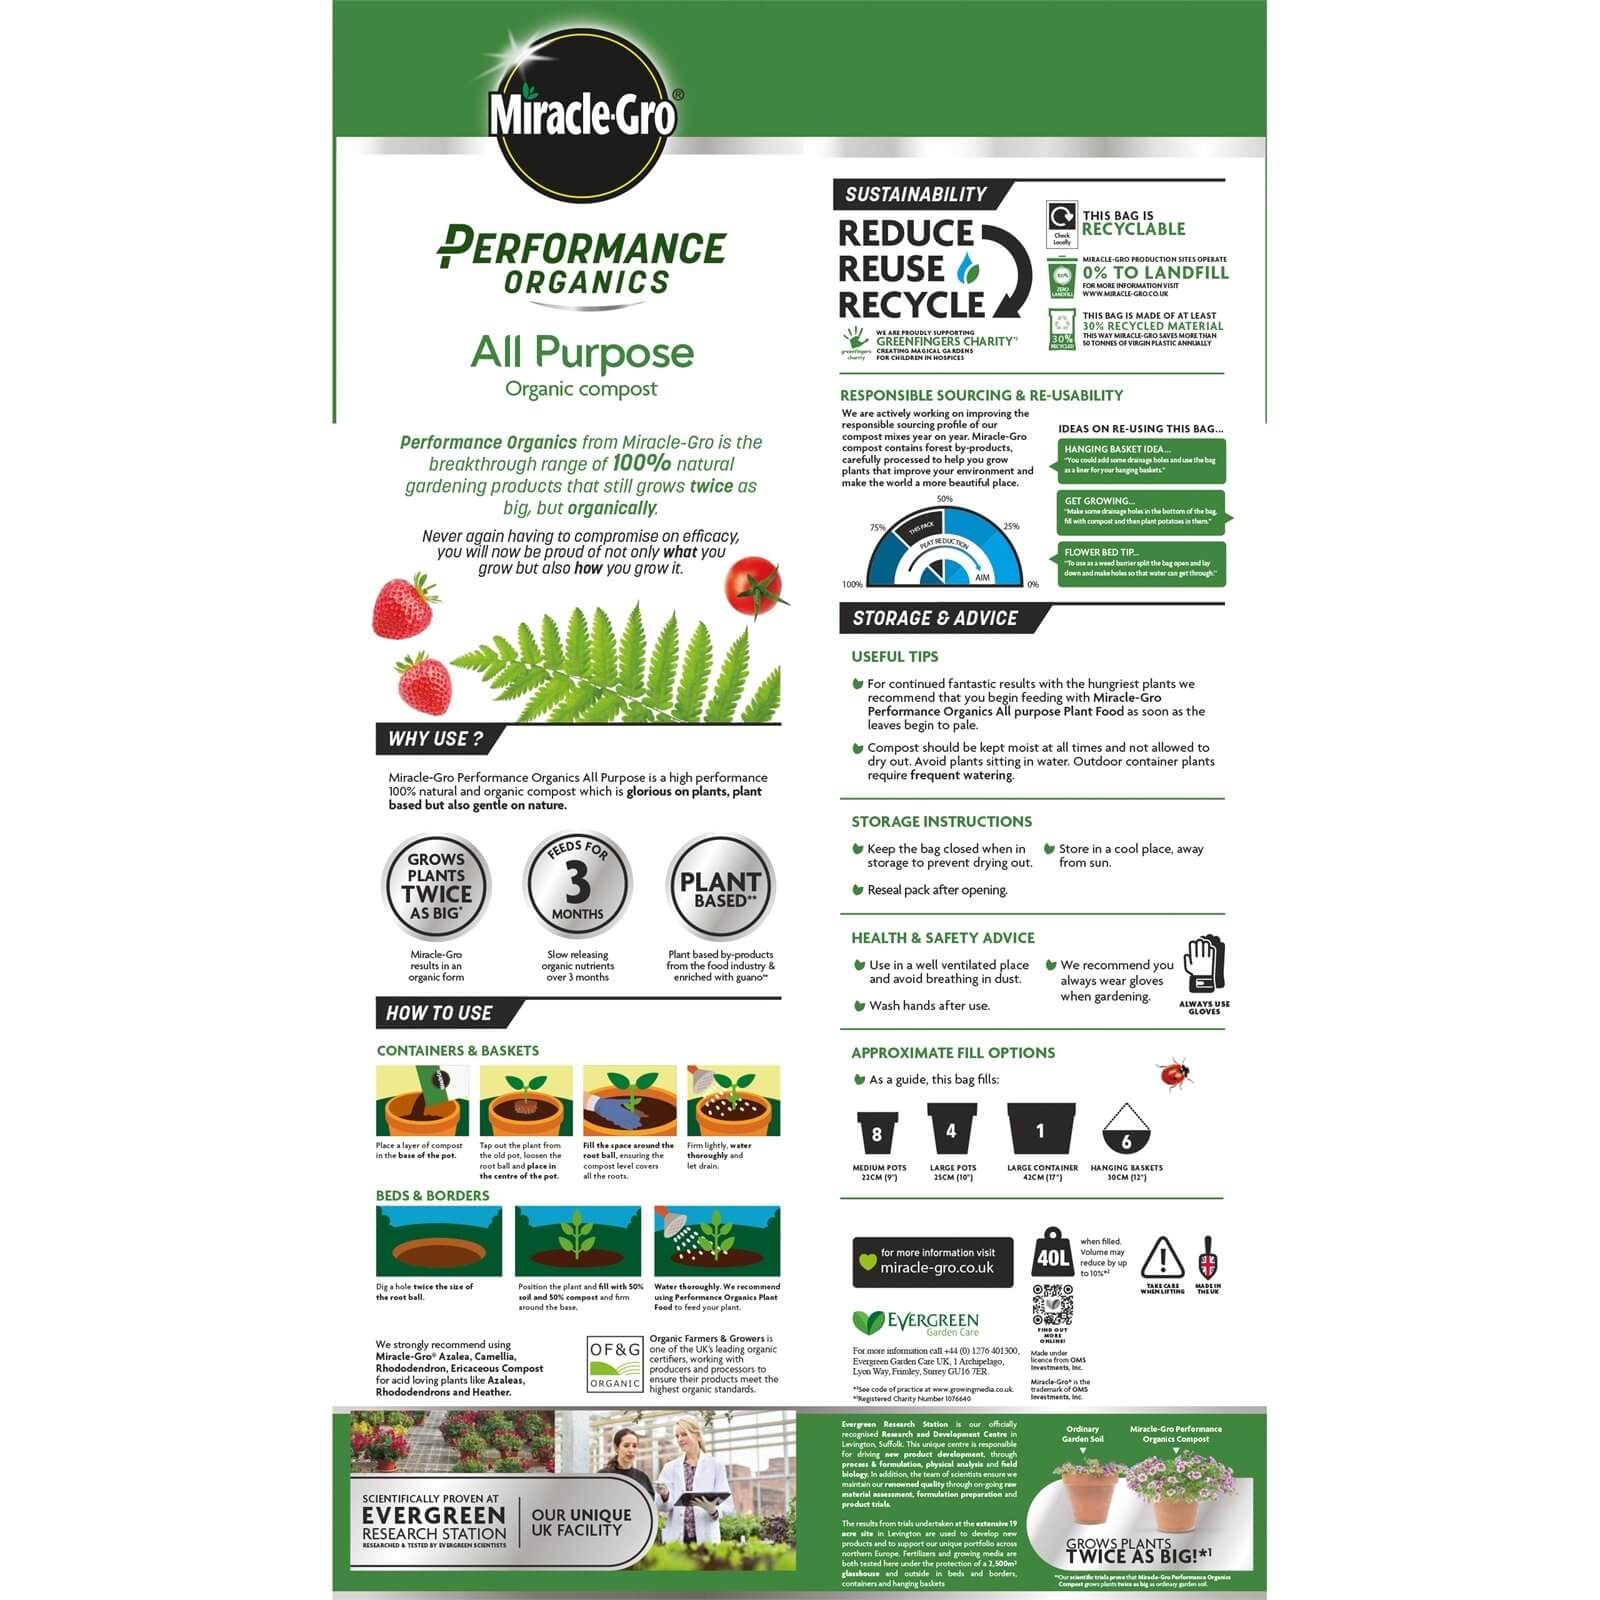 Miracle-Gro Performance Organics All Purpose Organic Compost - 40L